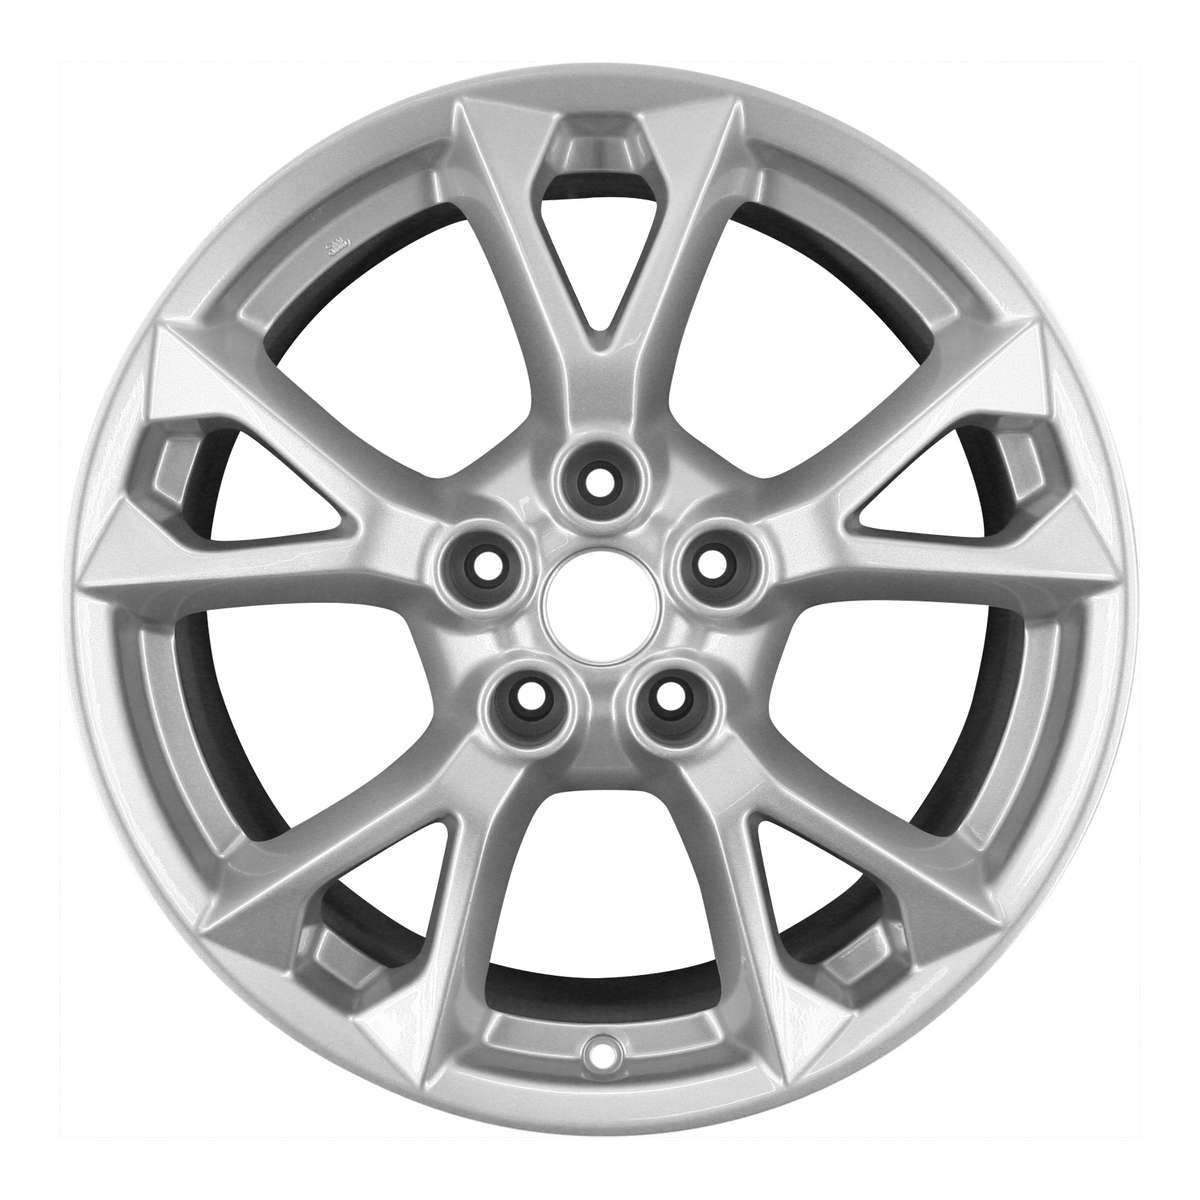 2014 Nissan Maxima 18" OEM Wheel Rim W62582S